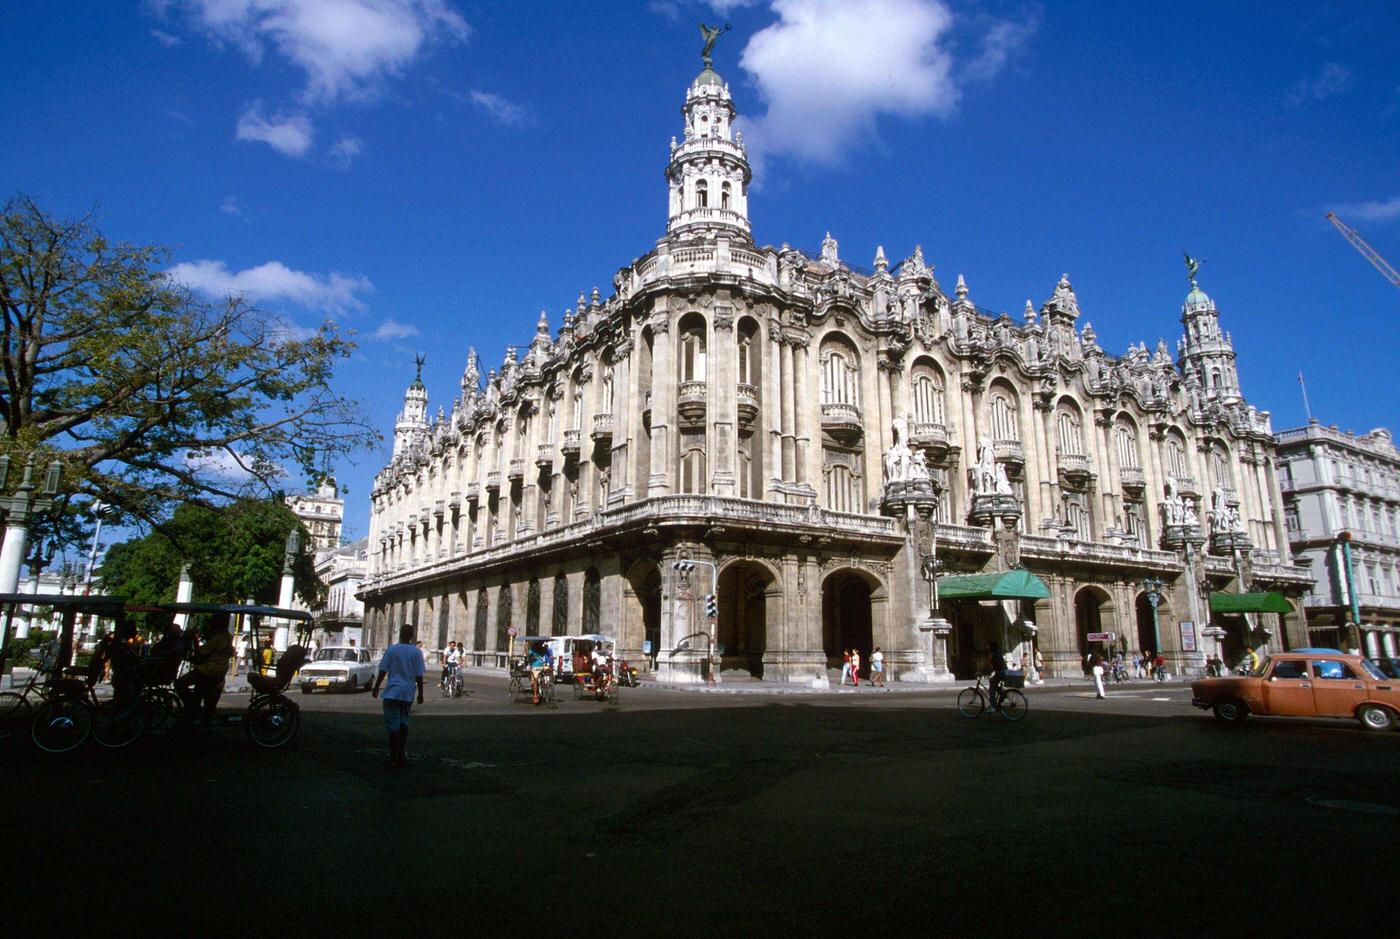 Gran Teatro de La Habana in Havana, Cuba, 1990.